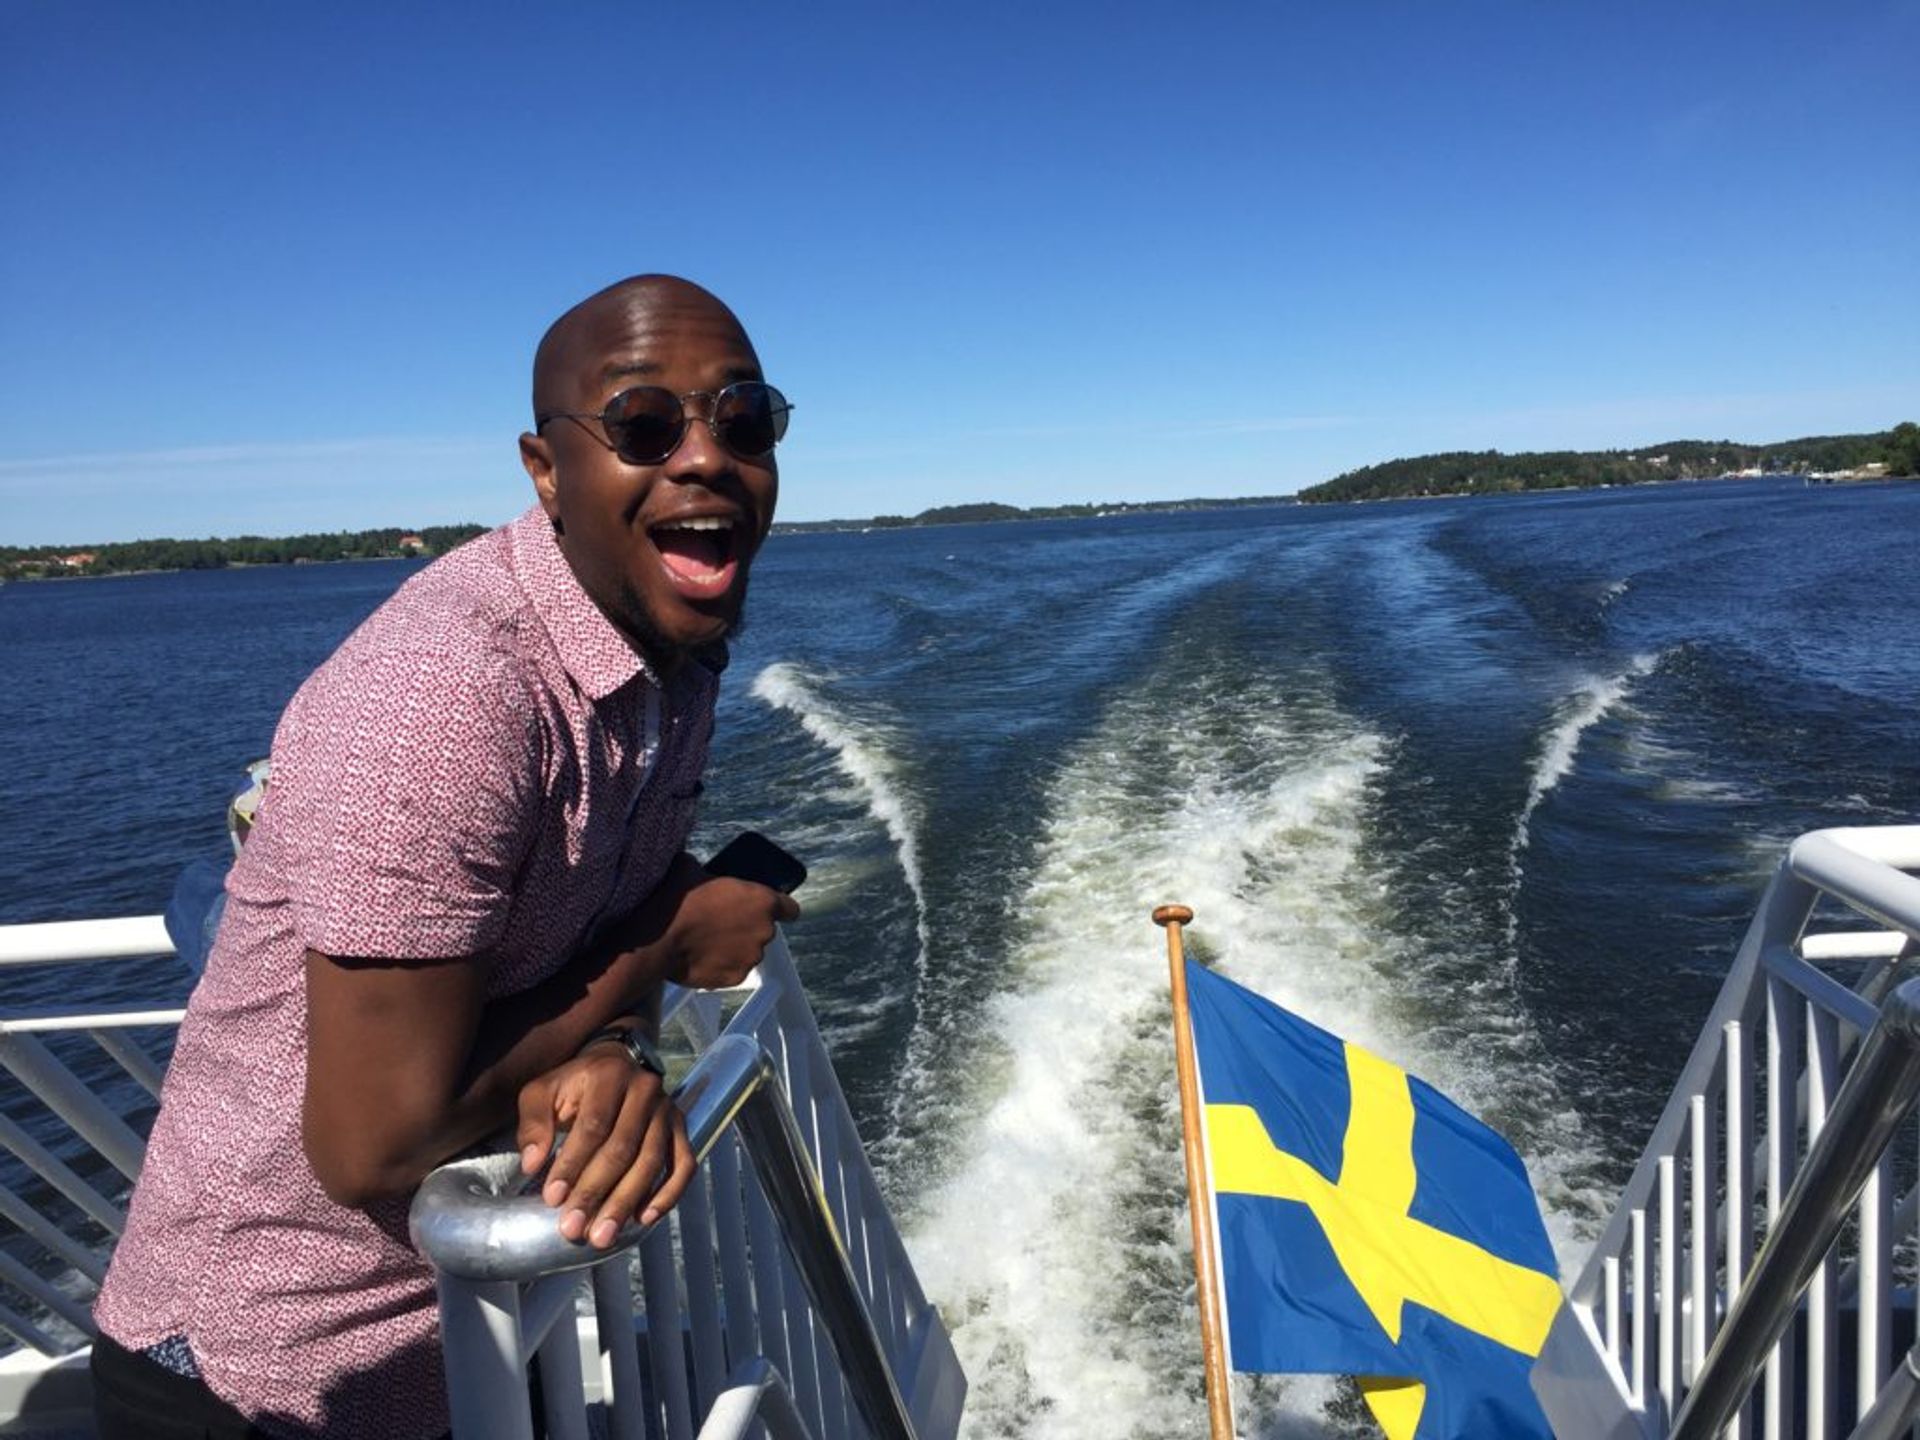 Digital Ambassador Sanjay and the Stockholm Sea, June 2018